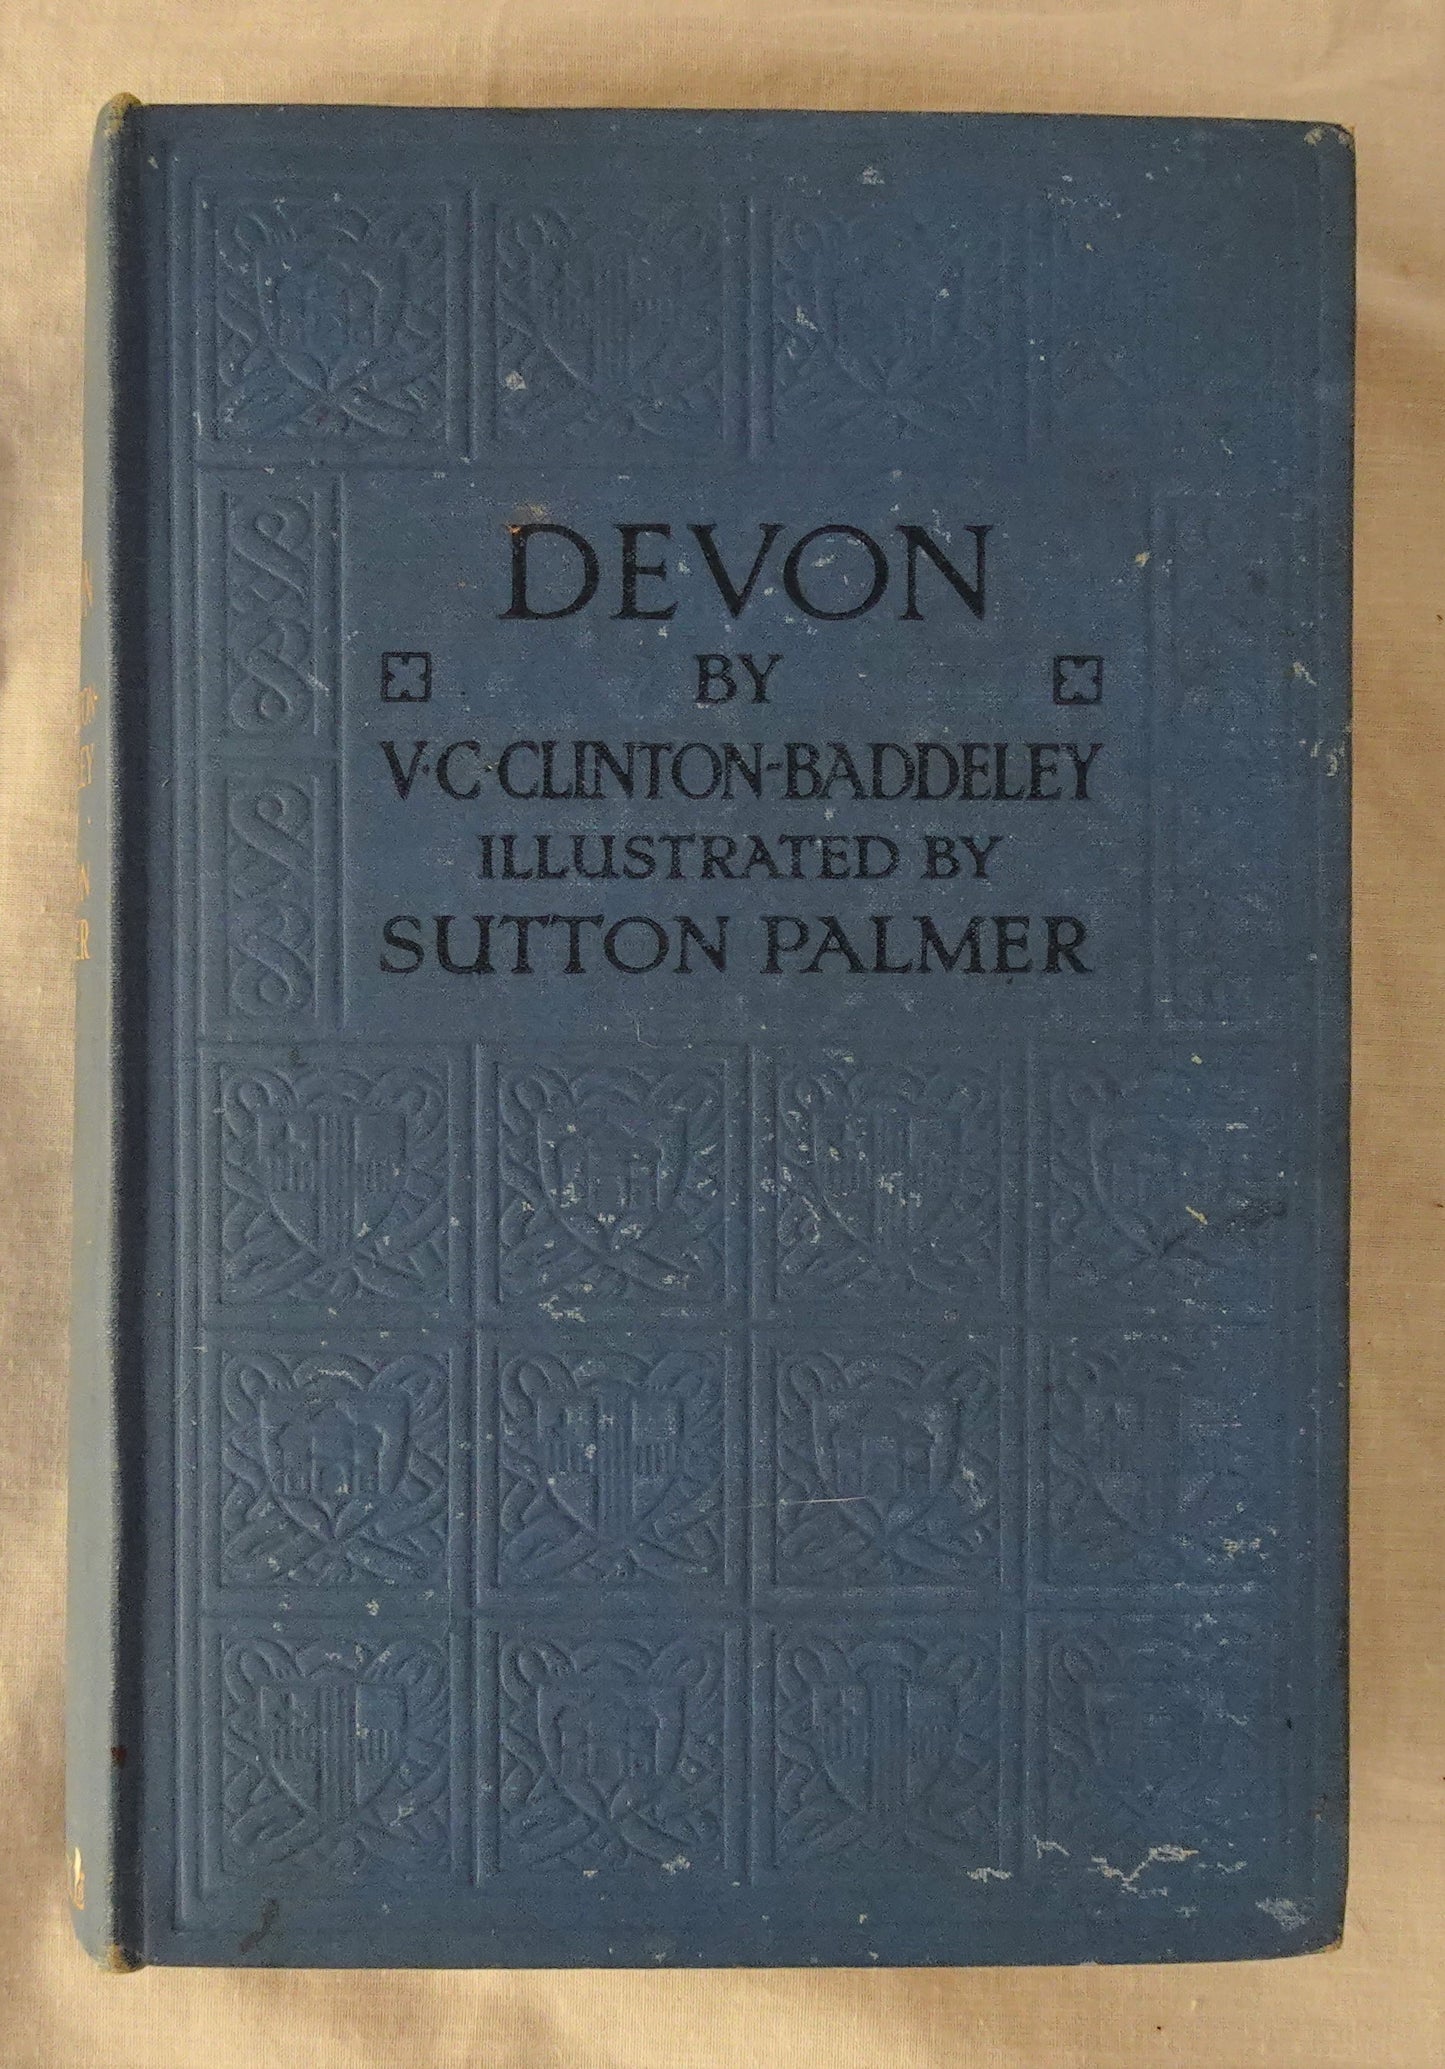 Devon  by V. C. Clinton-Baddeley  Illustrated by Sutton Palmer